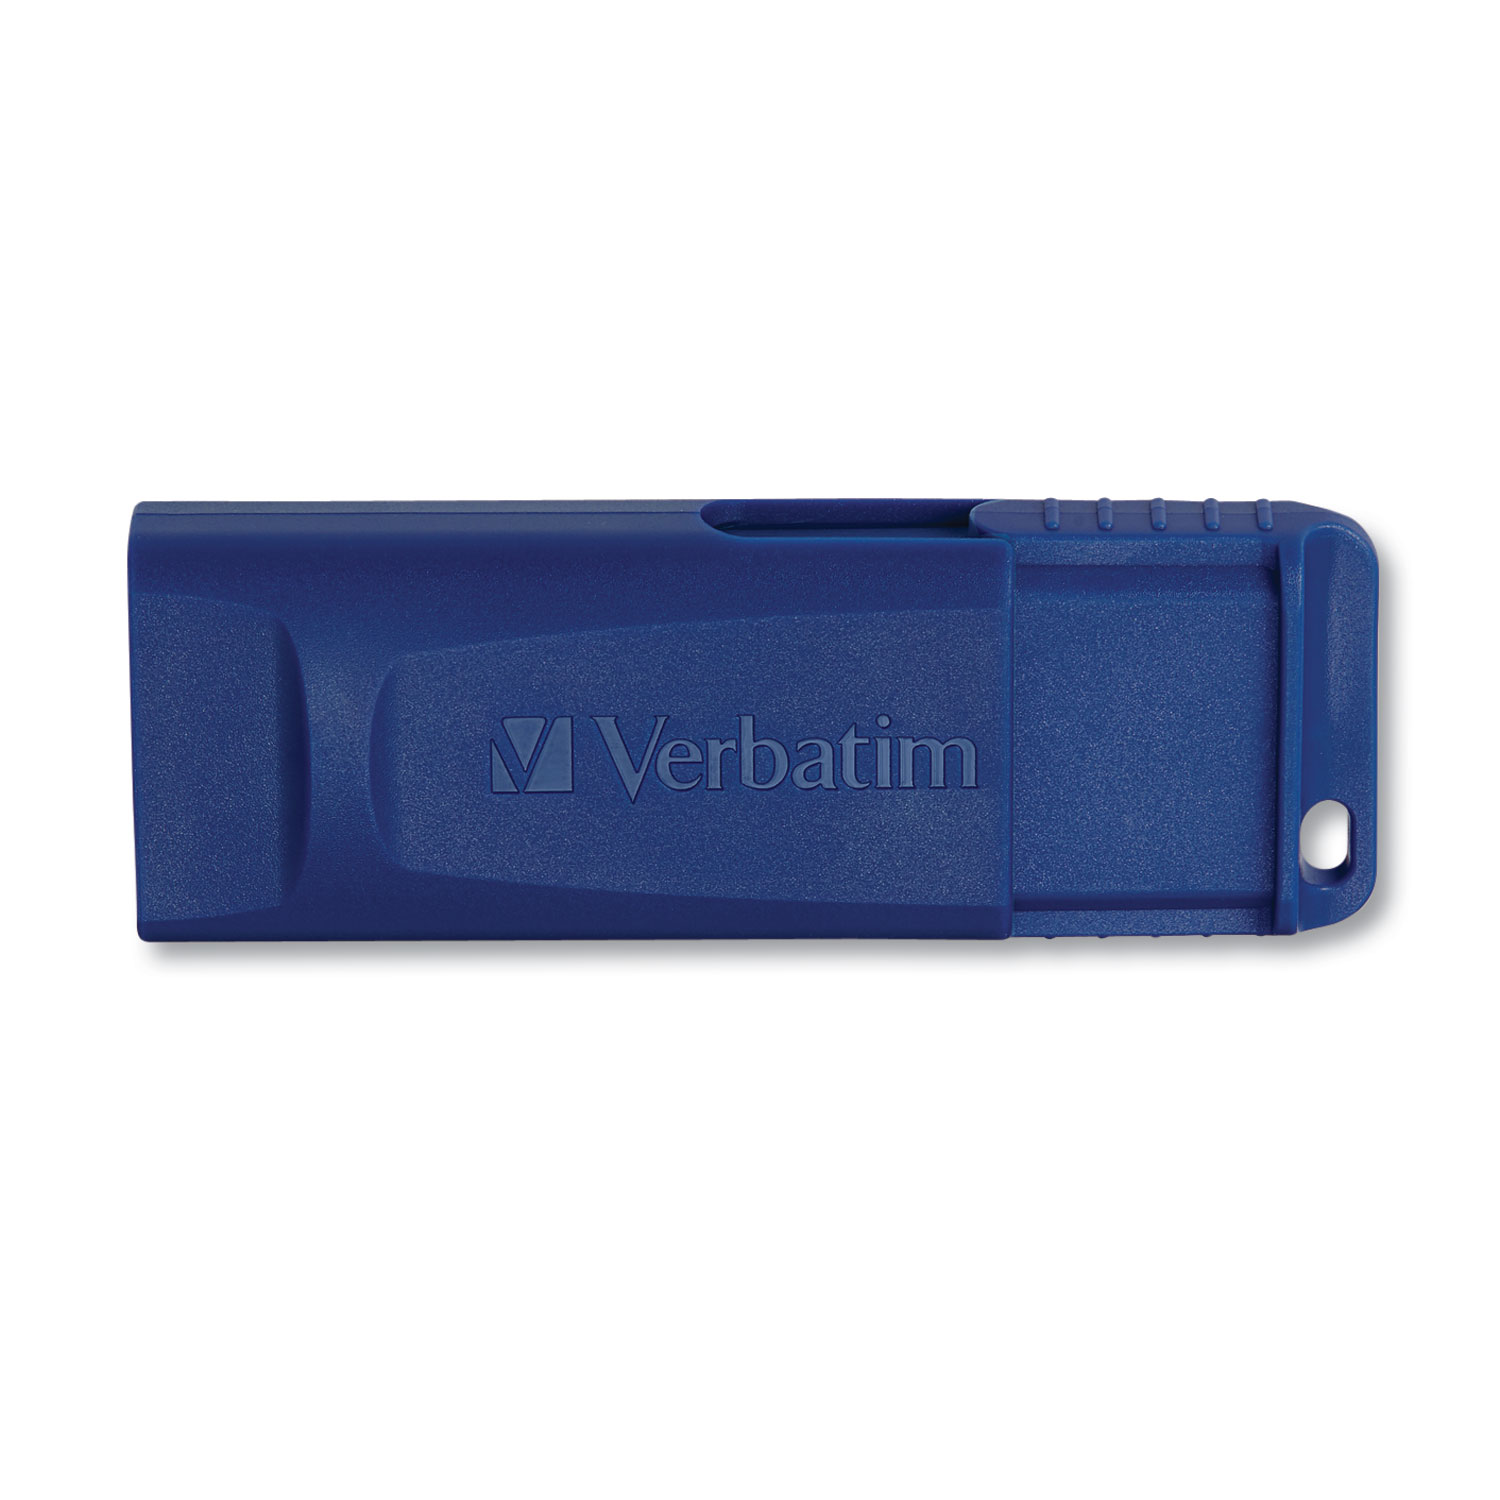 Verbatim Smart 32GB USB 2.0 Flash Drive Model 97408 - image 4 of 4